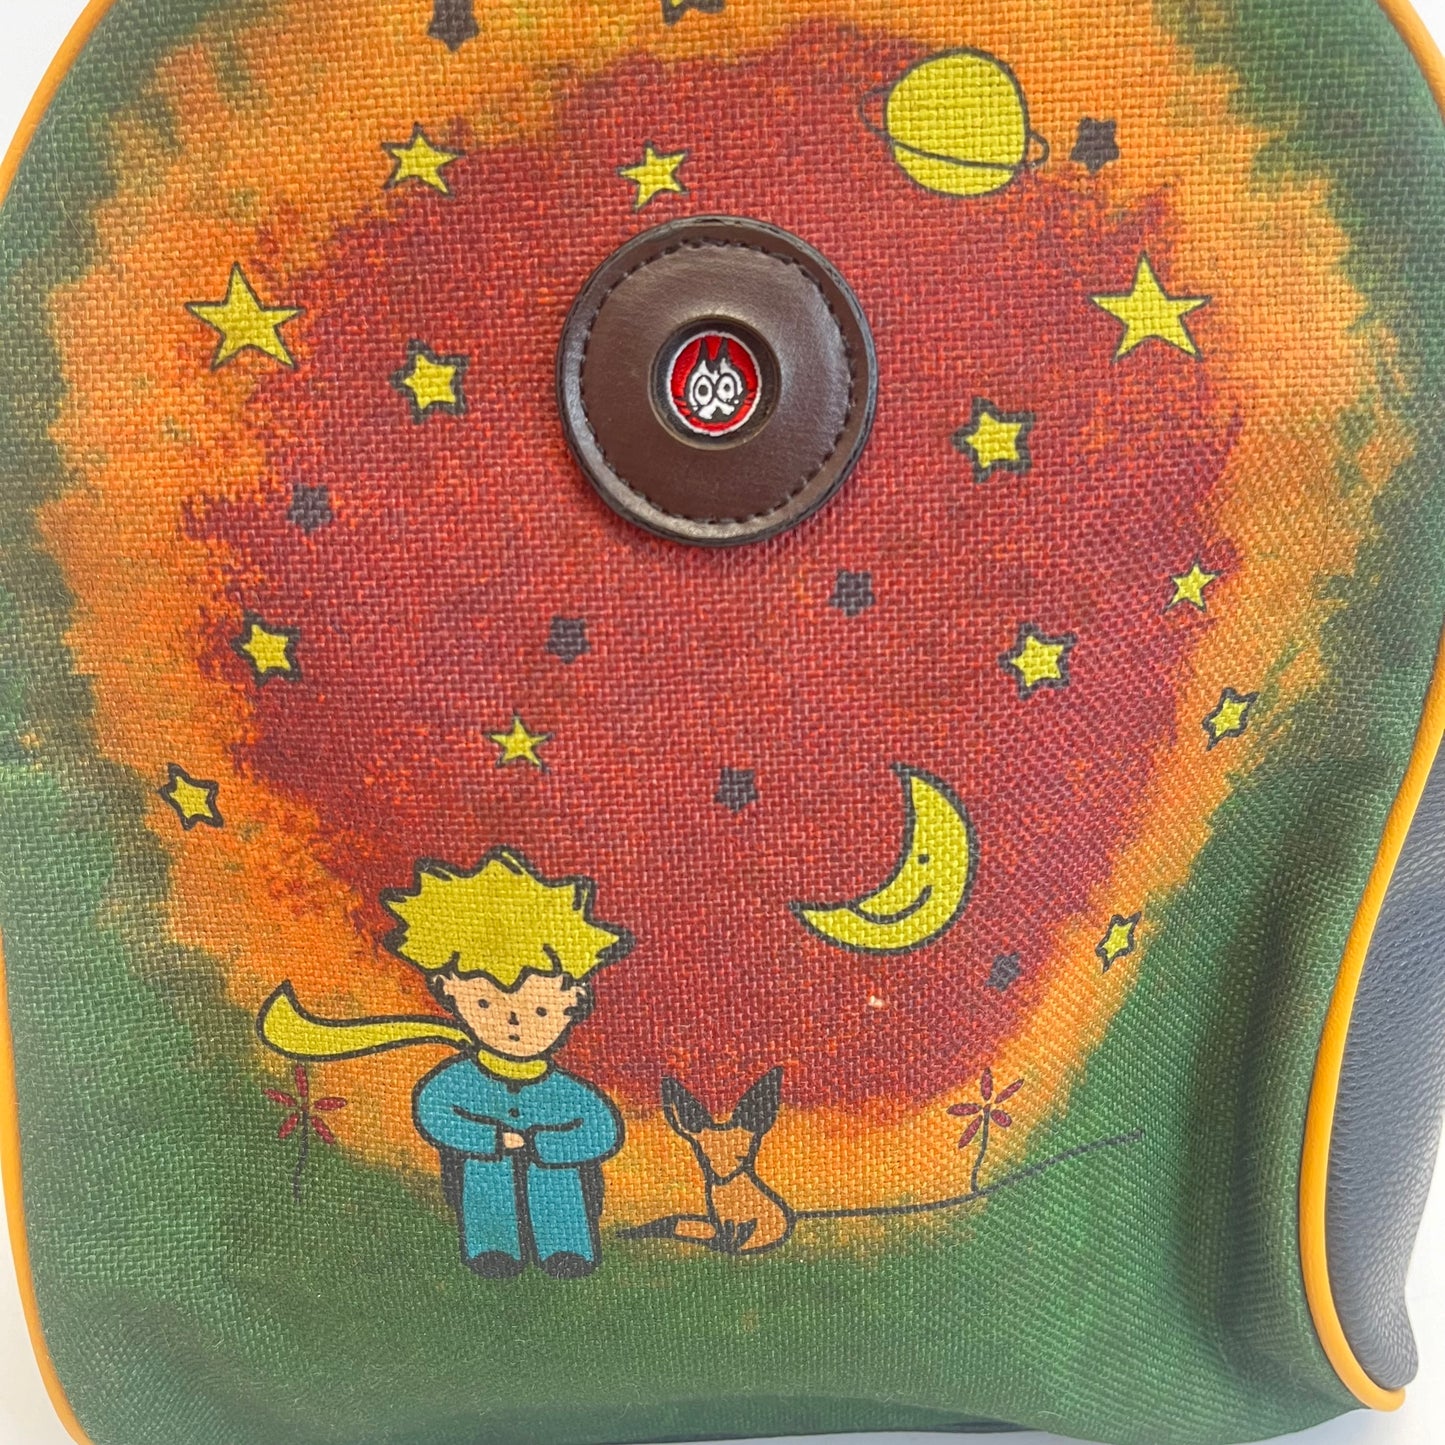 Sasikedi Little Prince Moon Painted Leather Backpack Sasi Kedi (squint cat) Turkish